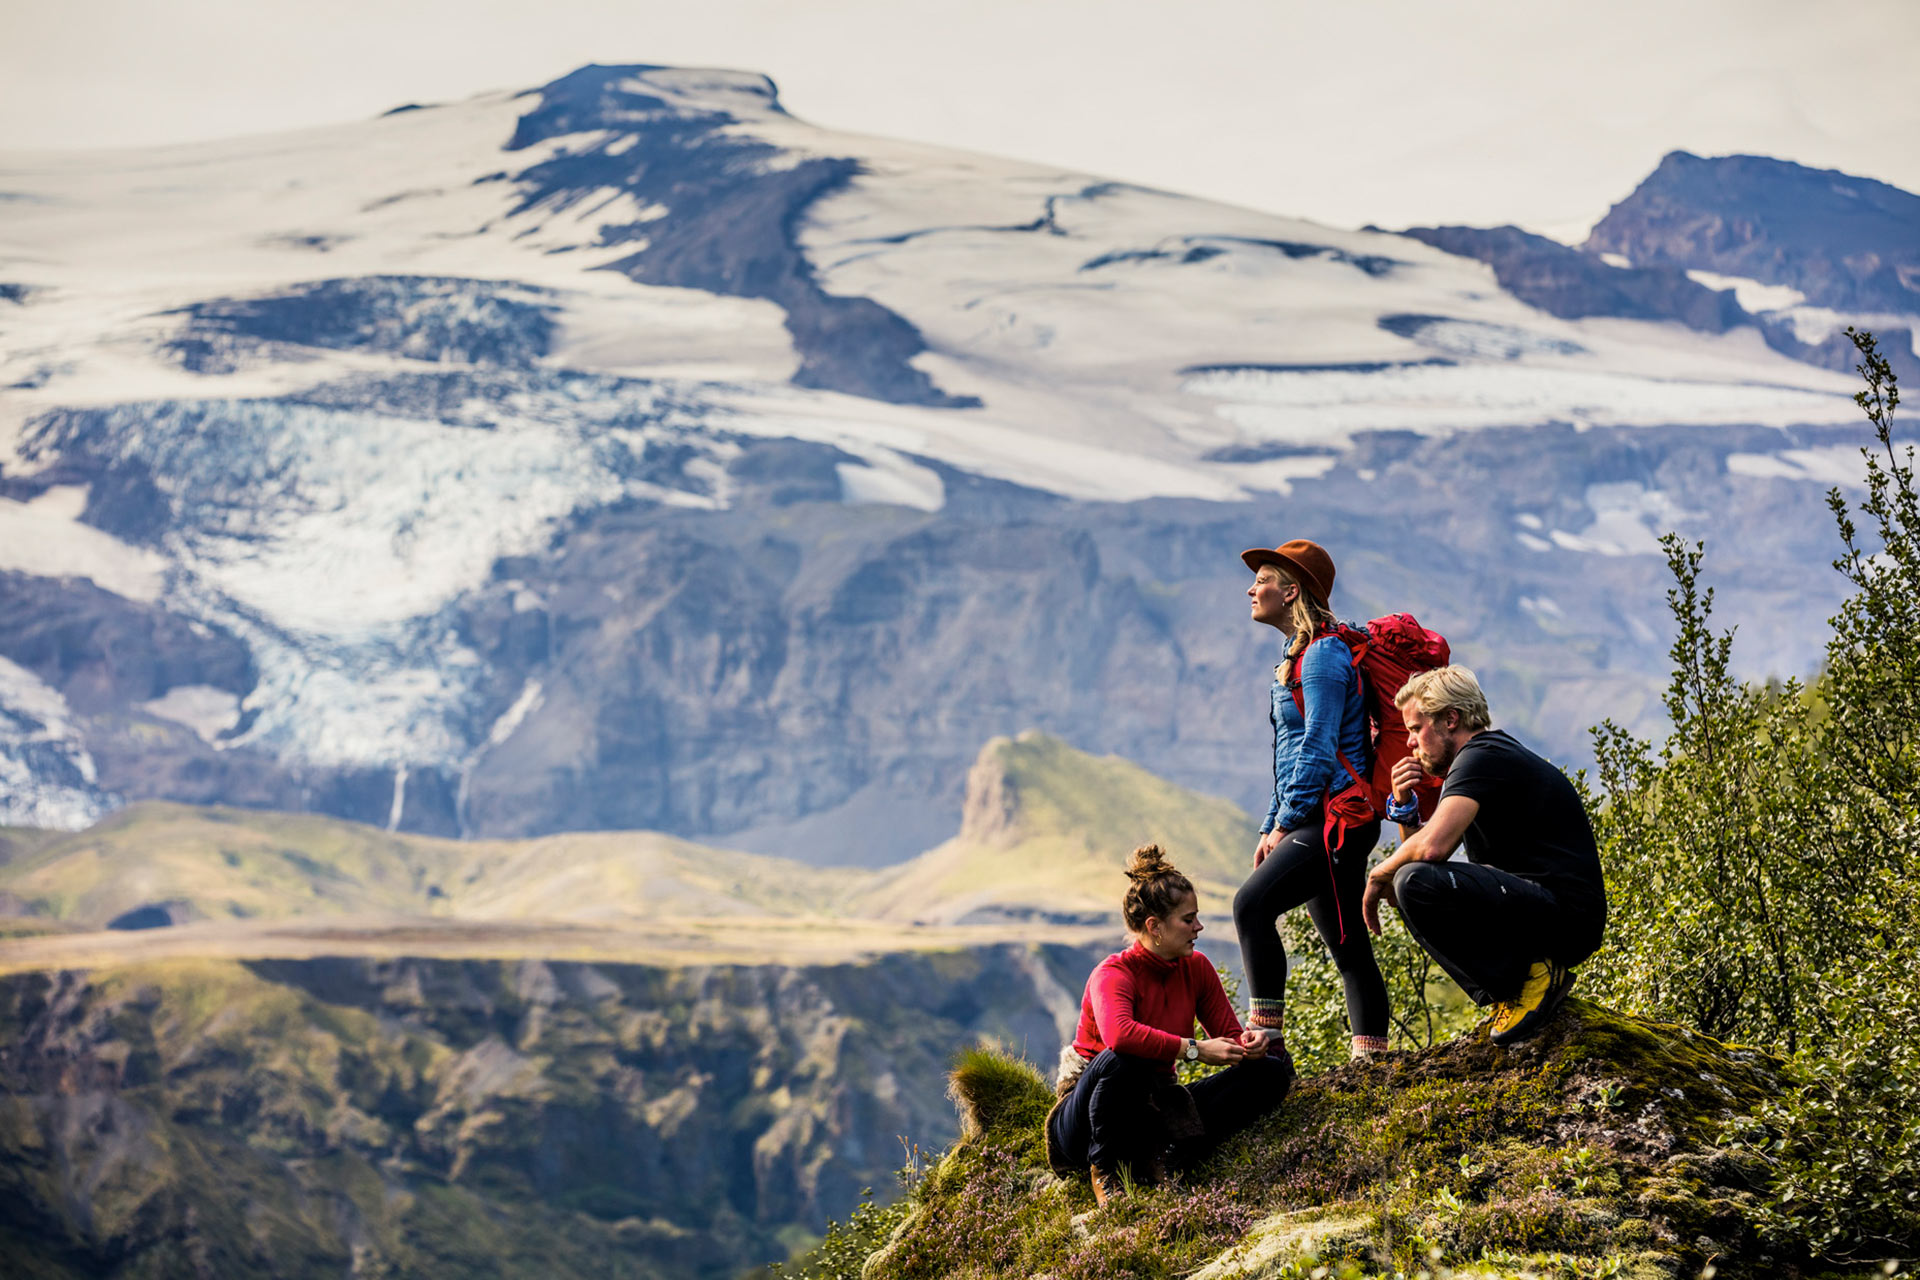 You'll get fantastic views of the Icelandic landscapes while hiking in Þórsmörk valley.